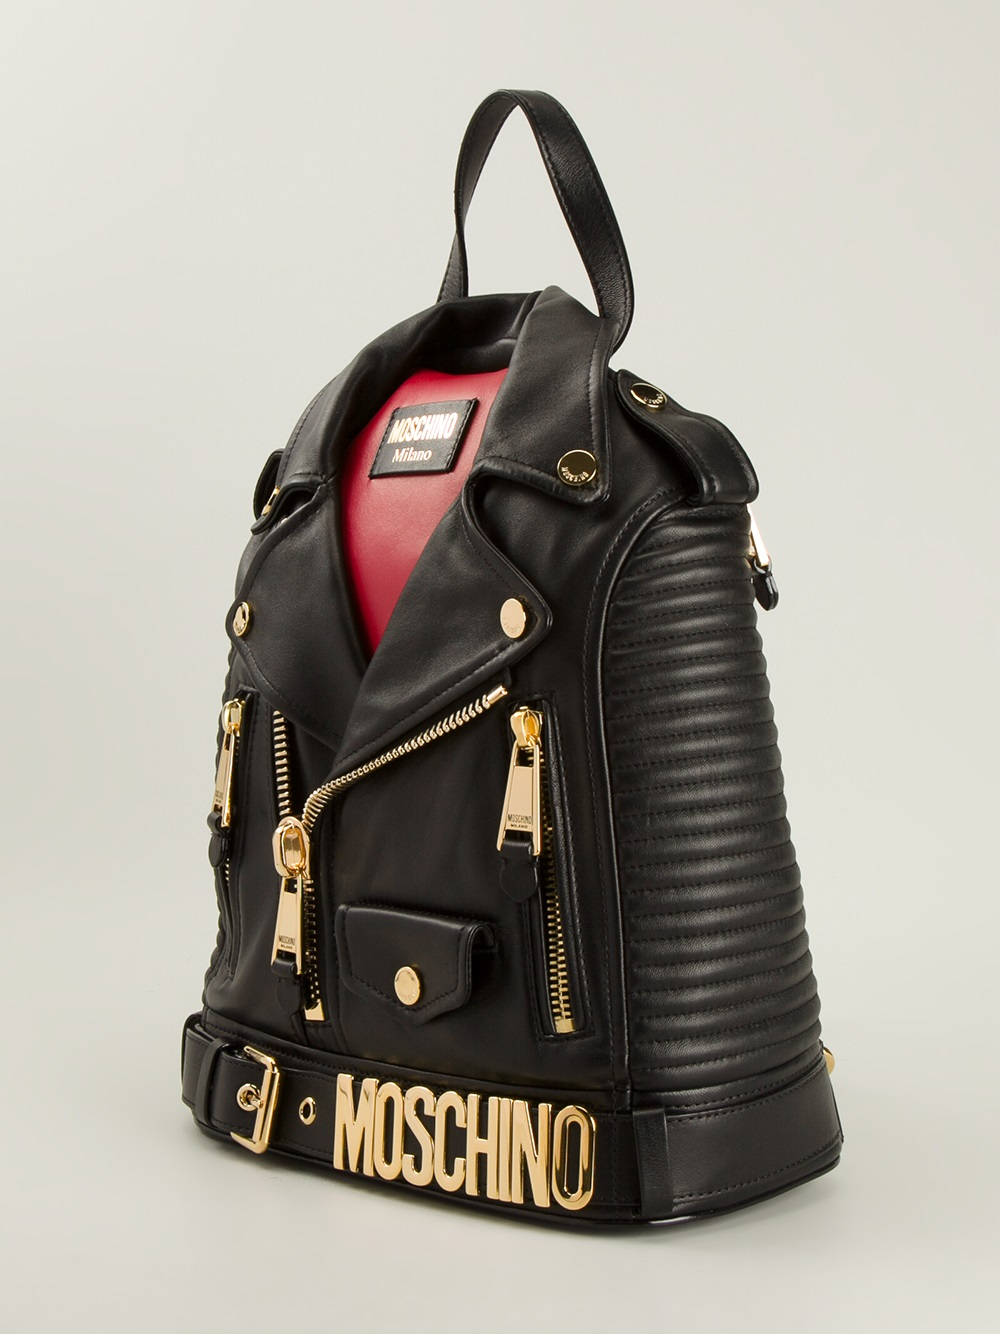 moschino biker backpack